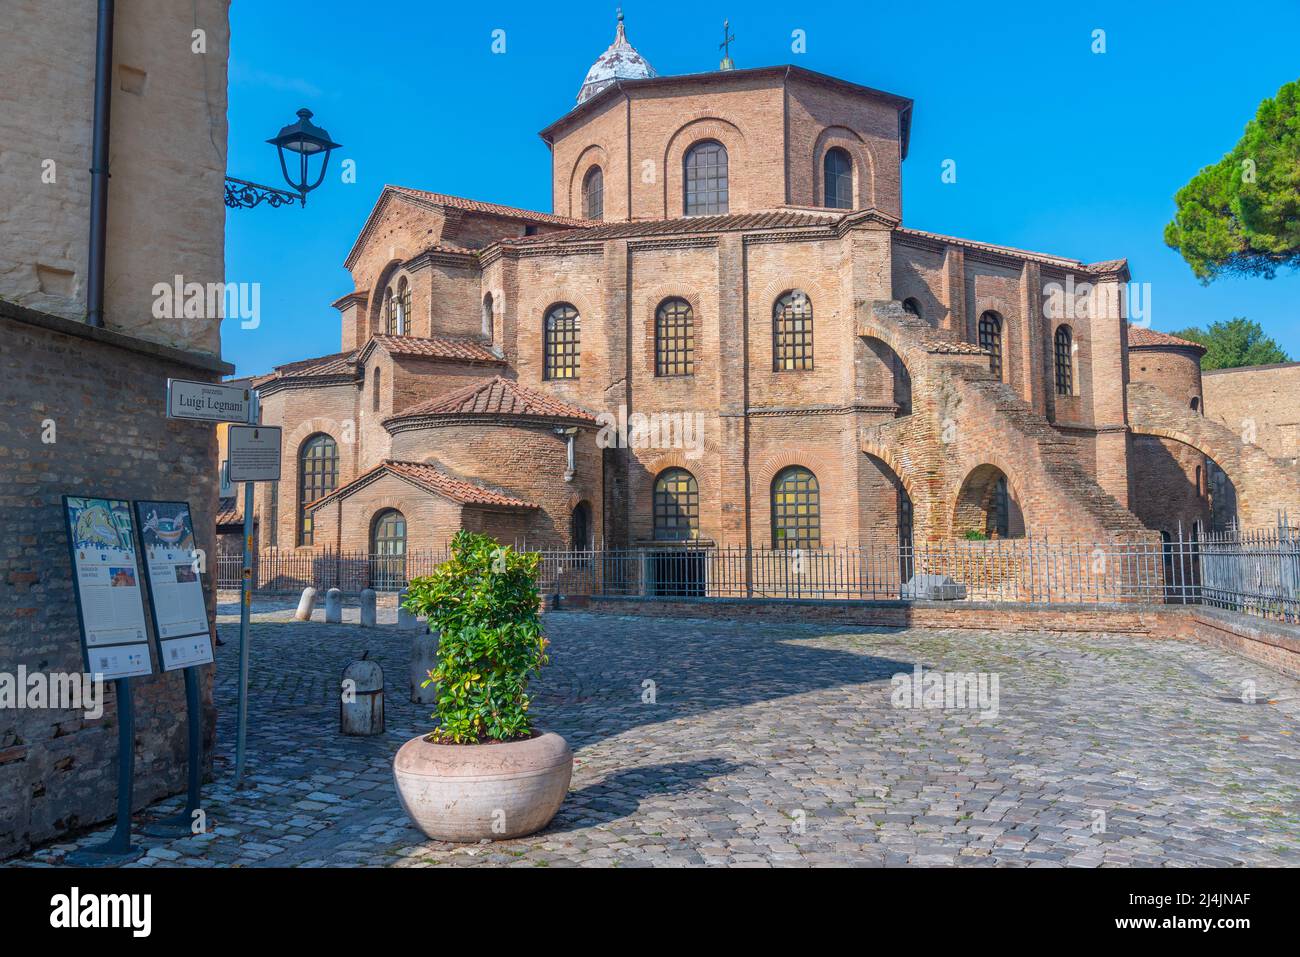 Basilica di San Vitale in Ravenna, Italy. Stock Photo